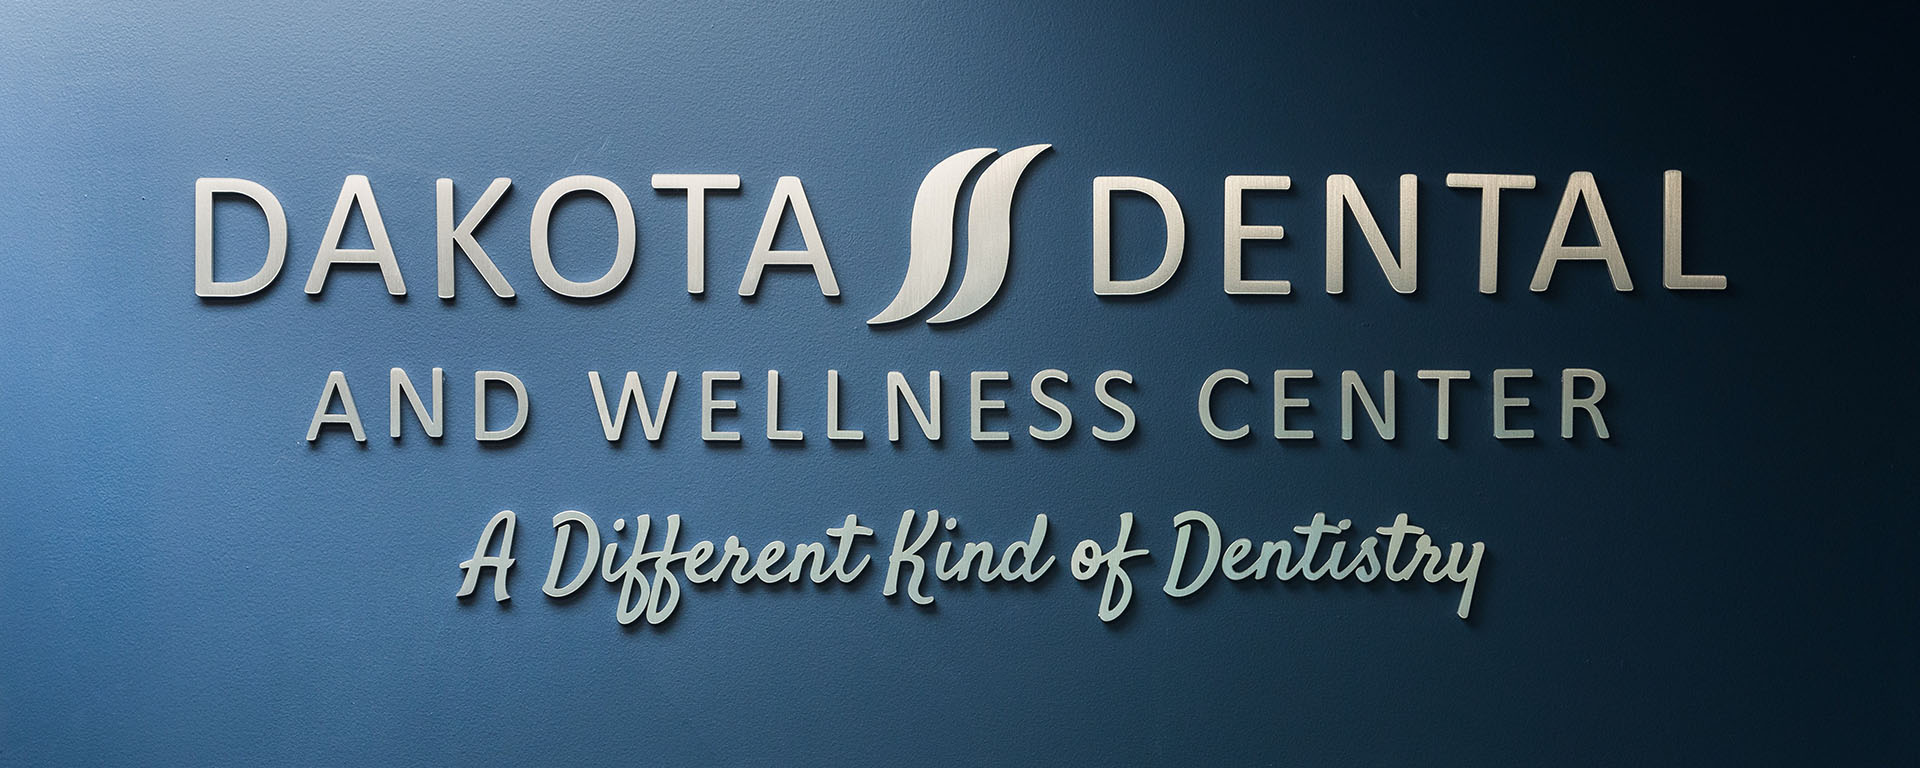 Dakota Dental And Wellnes Center